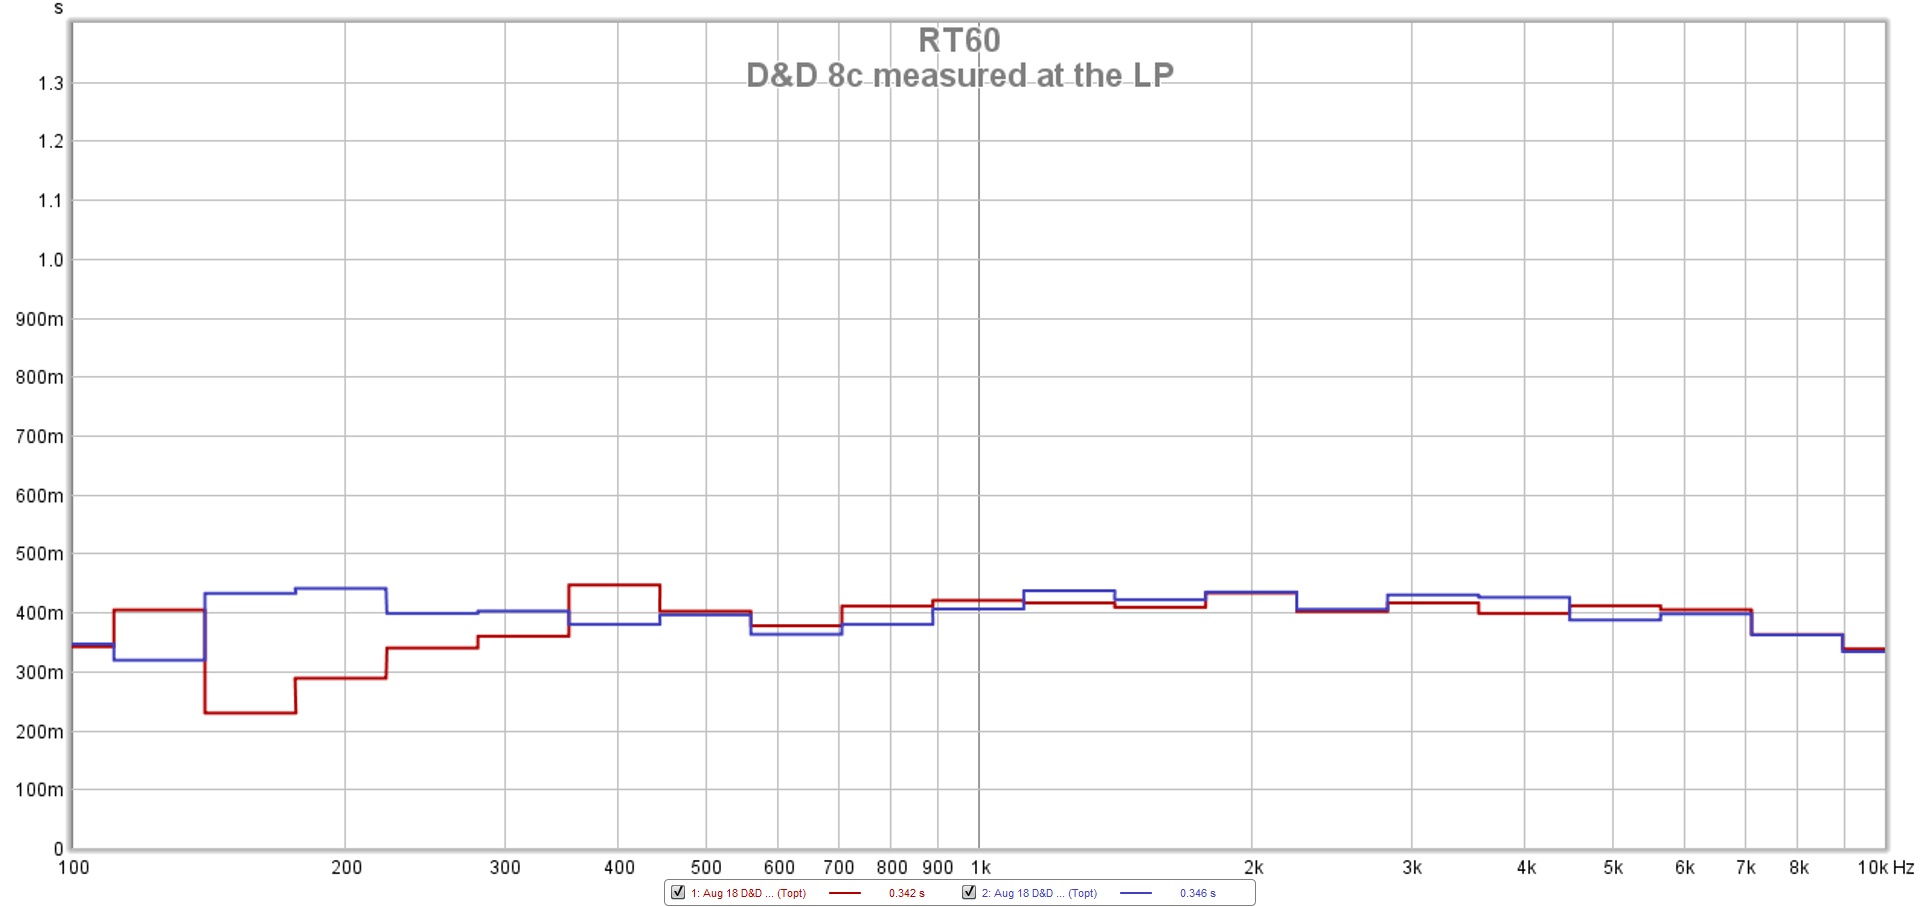 D&D 8c RT60 measured at the LP.jpg